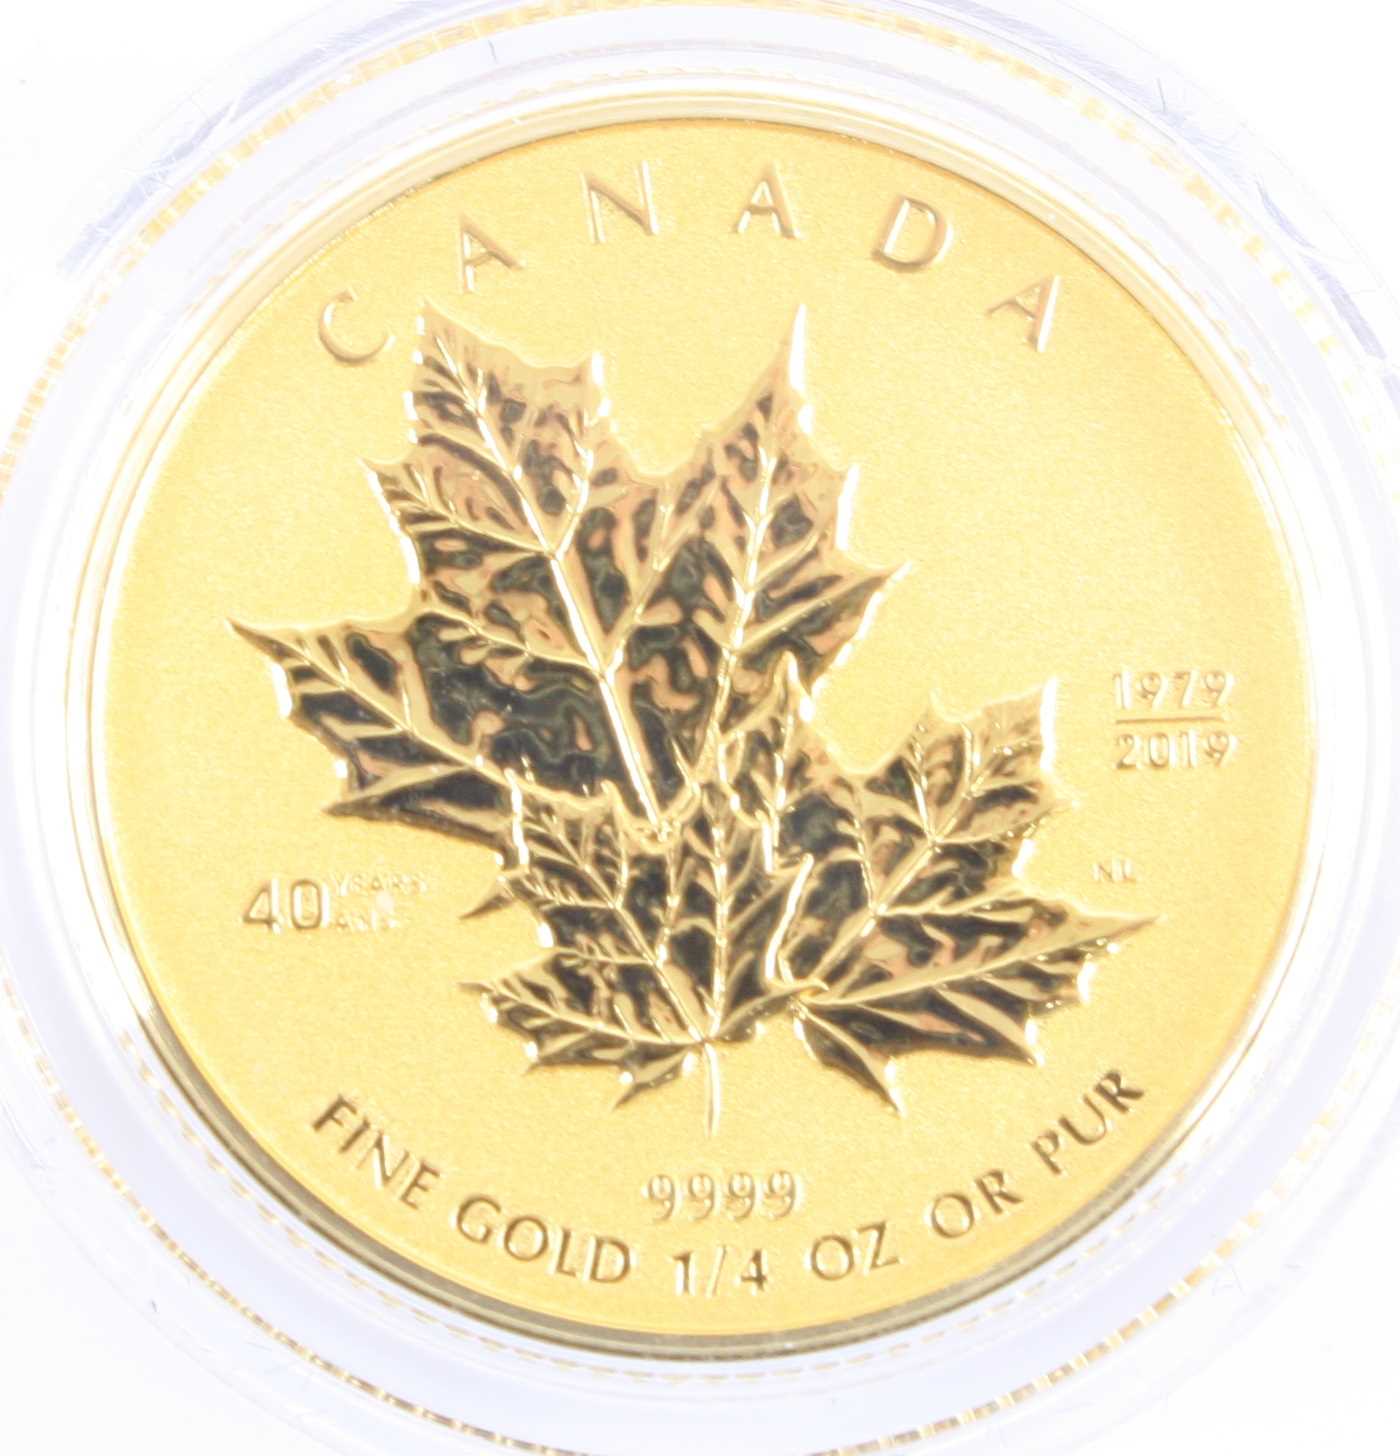 Royal Canadian Mint, Canada 2019 Maple Leaf 1/4oz Gold Proof Coin, obv: Elizabeth II, rev: Maple - Image 3 of 3